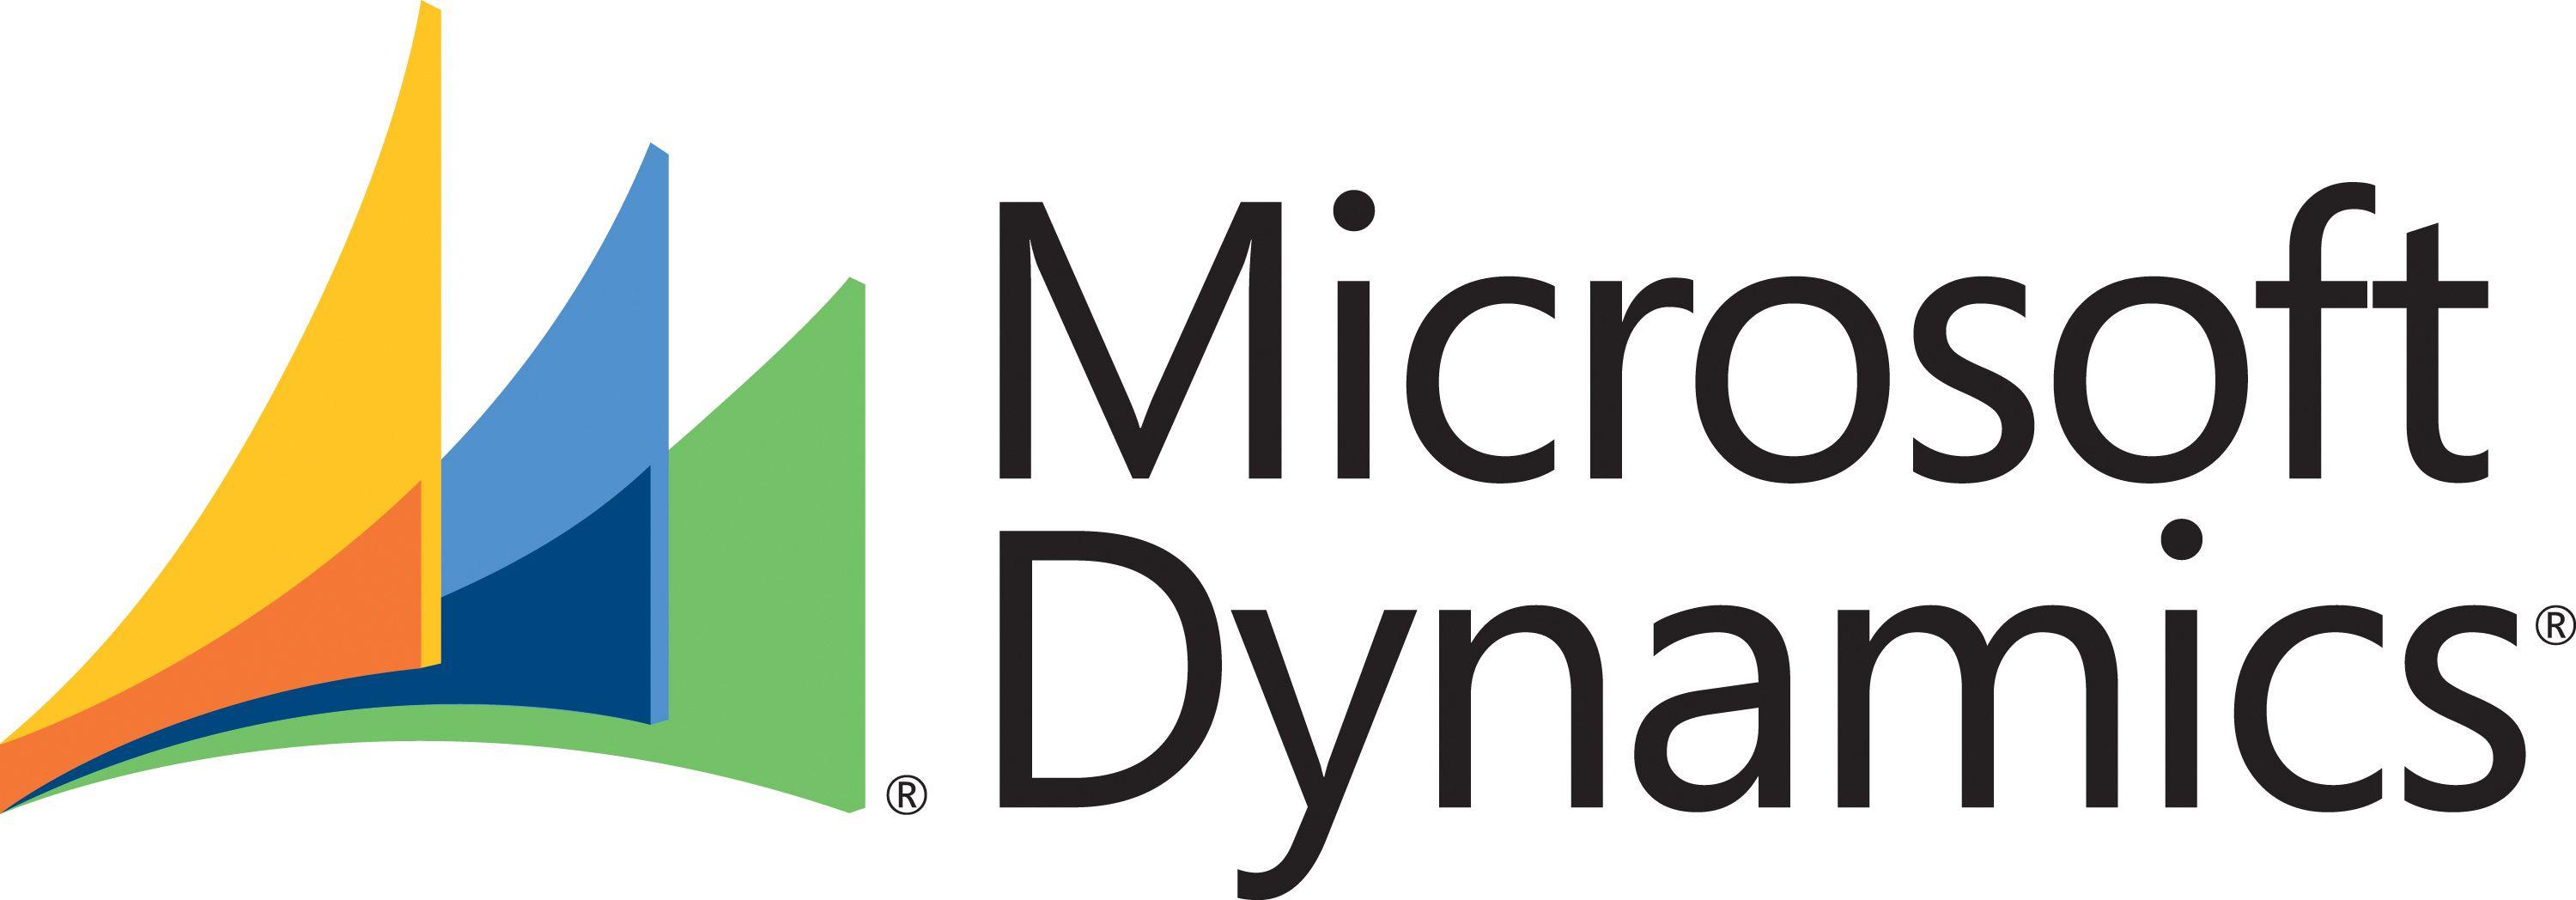 MS Dynamics CRM Logo - Brite Systems